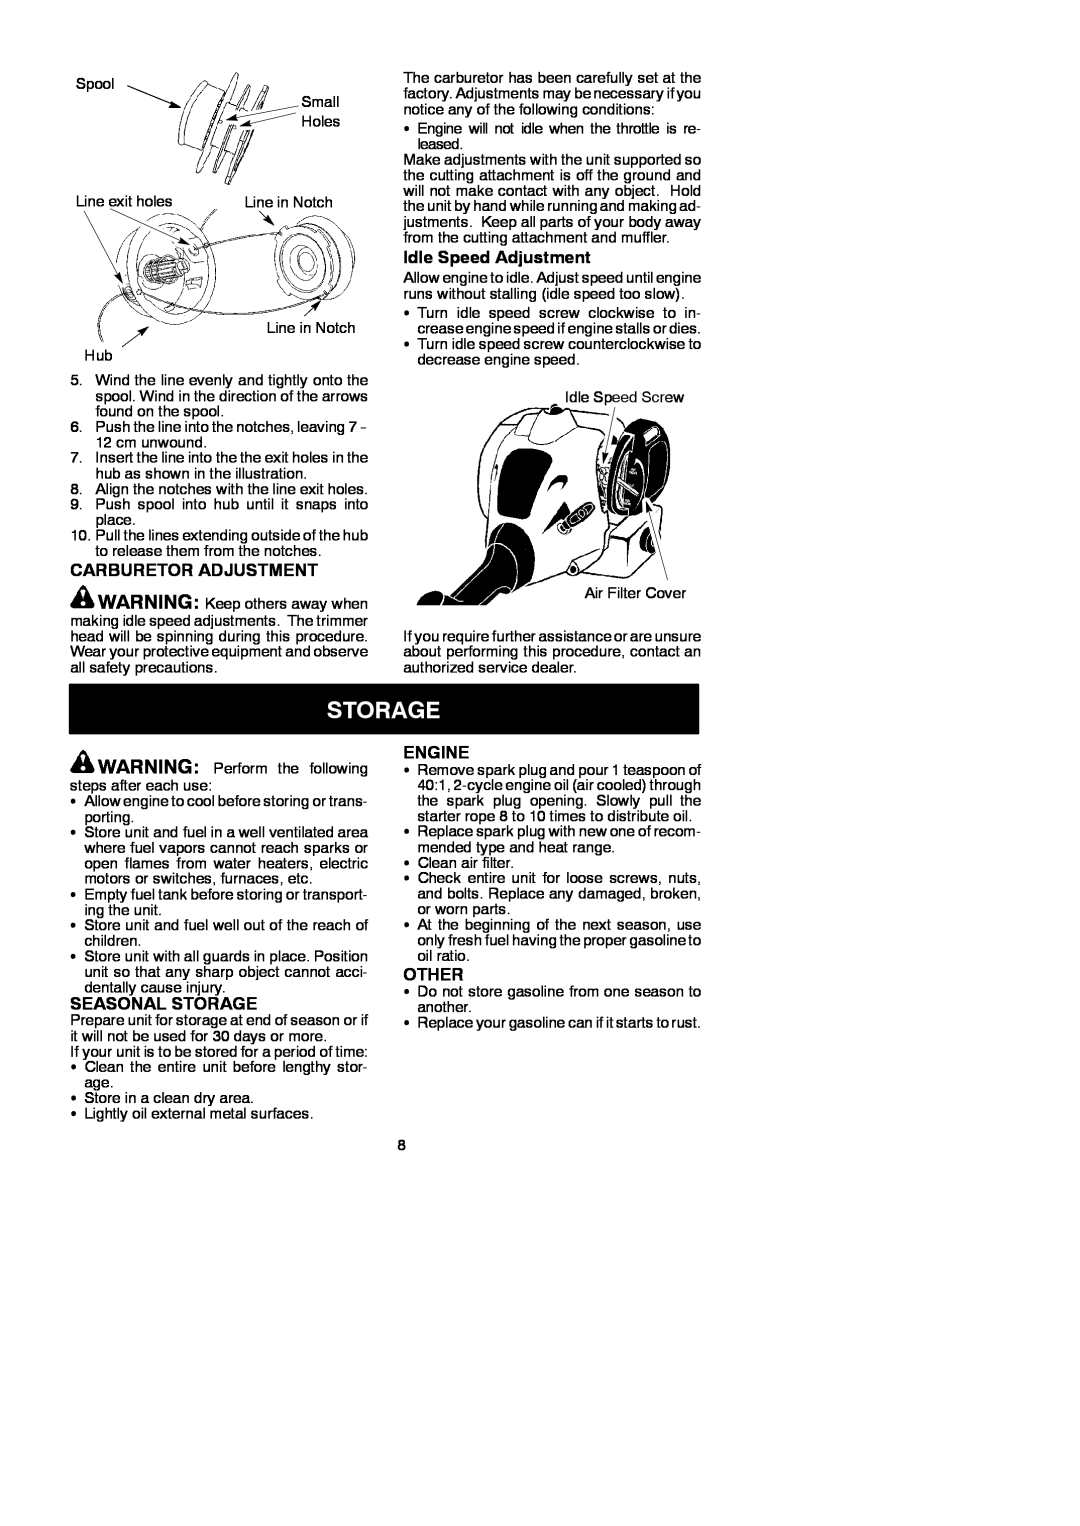 McCulloch 545097742 instruction manual Carburetor Adjustment, Idle Speed Adjustment, Seasonal Storage, Engine, Other 